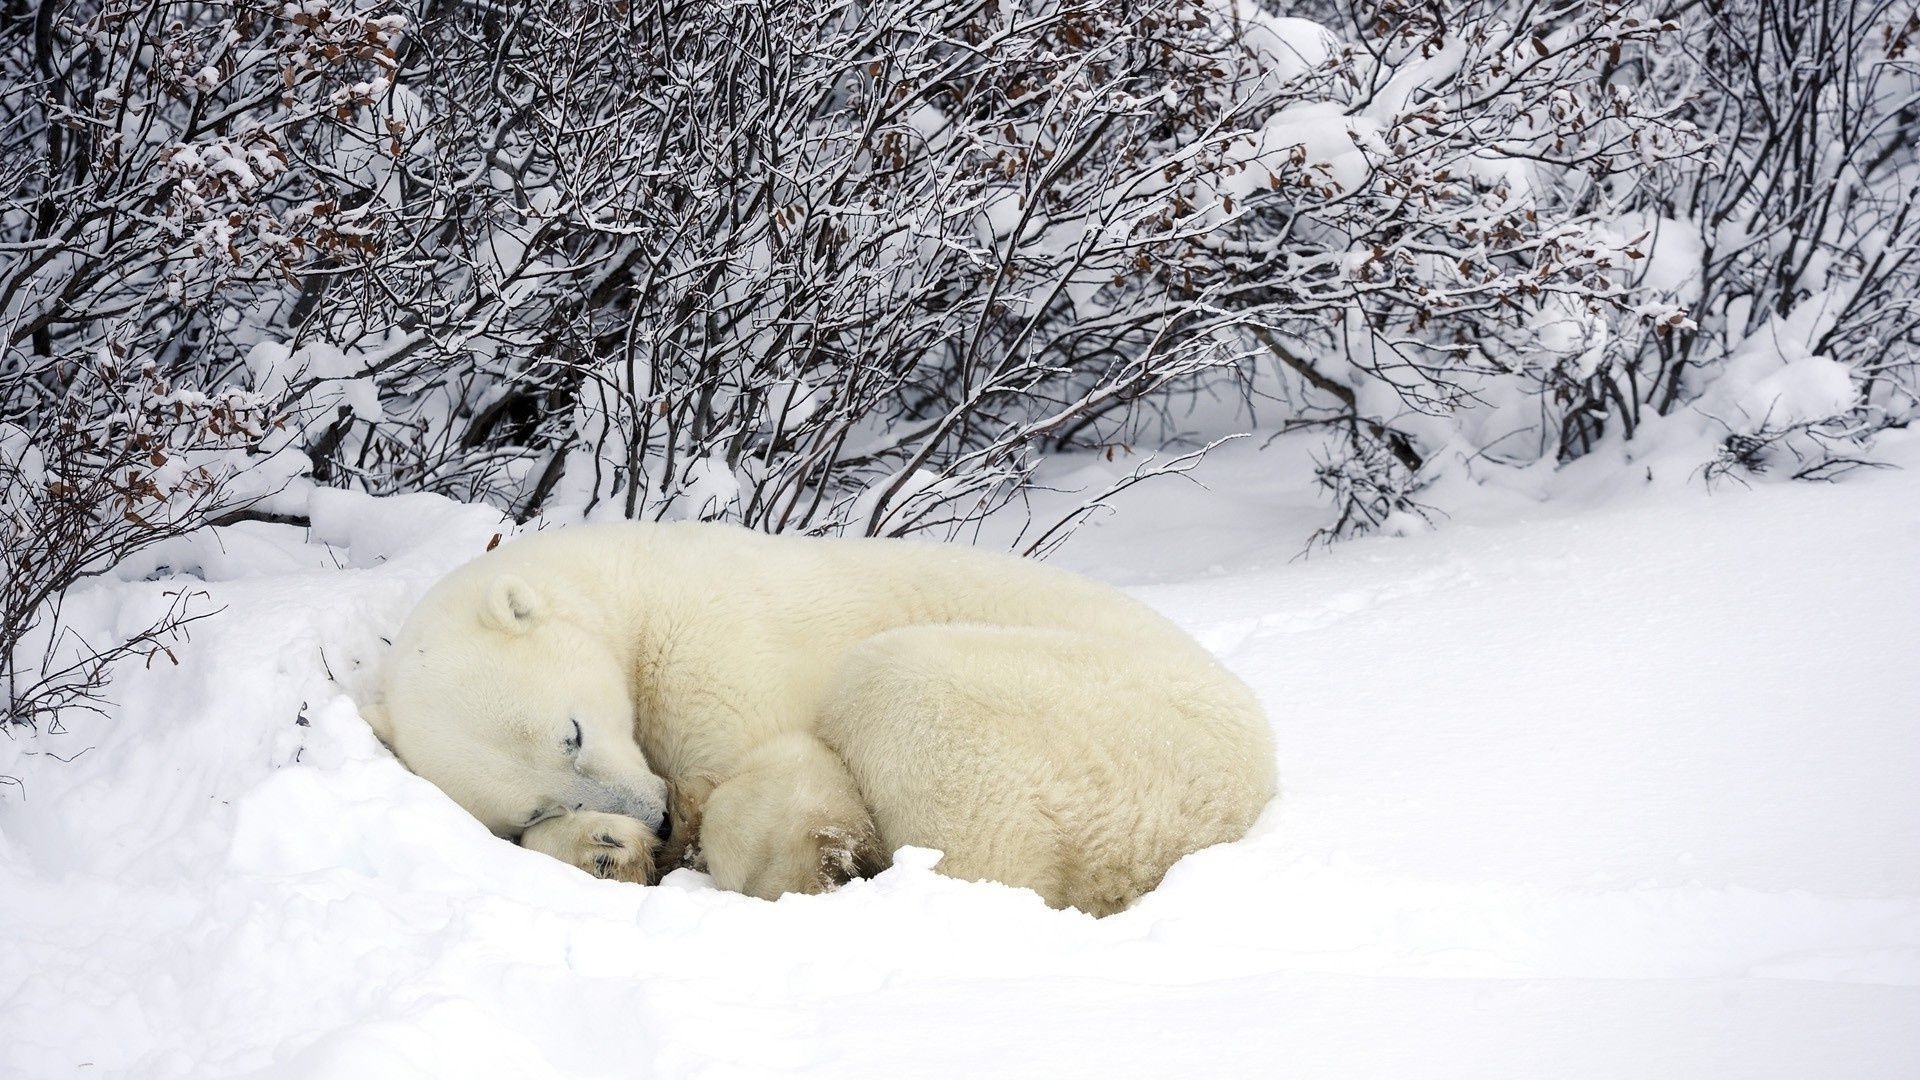 bears snow winter cold ice frost frosty frozen nature outdoors season weather tree wood snowdrift snow-white polar